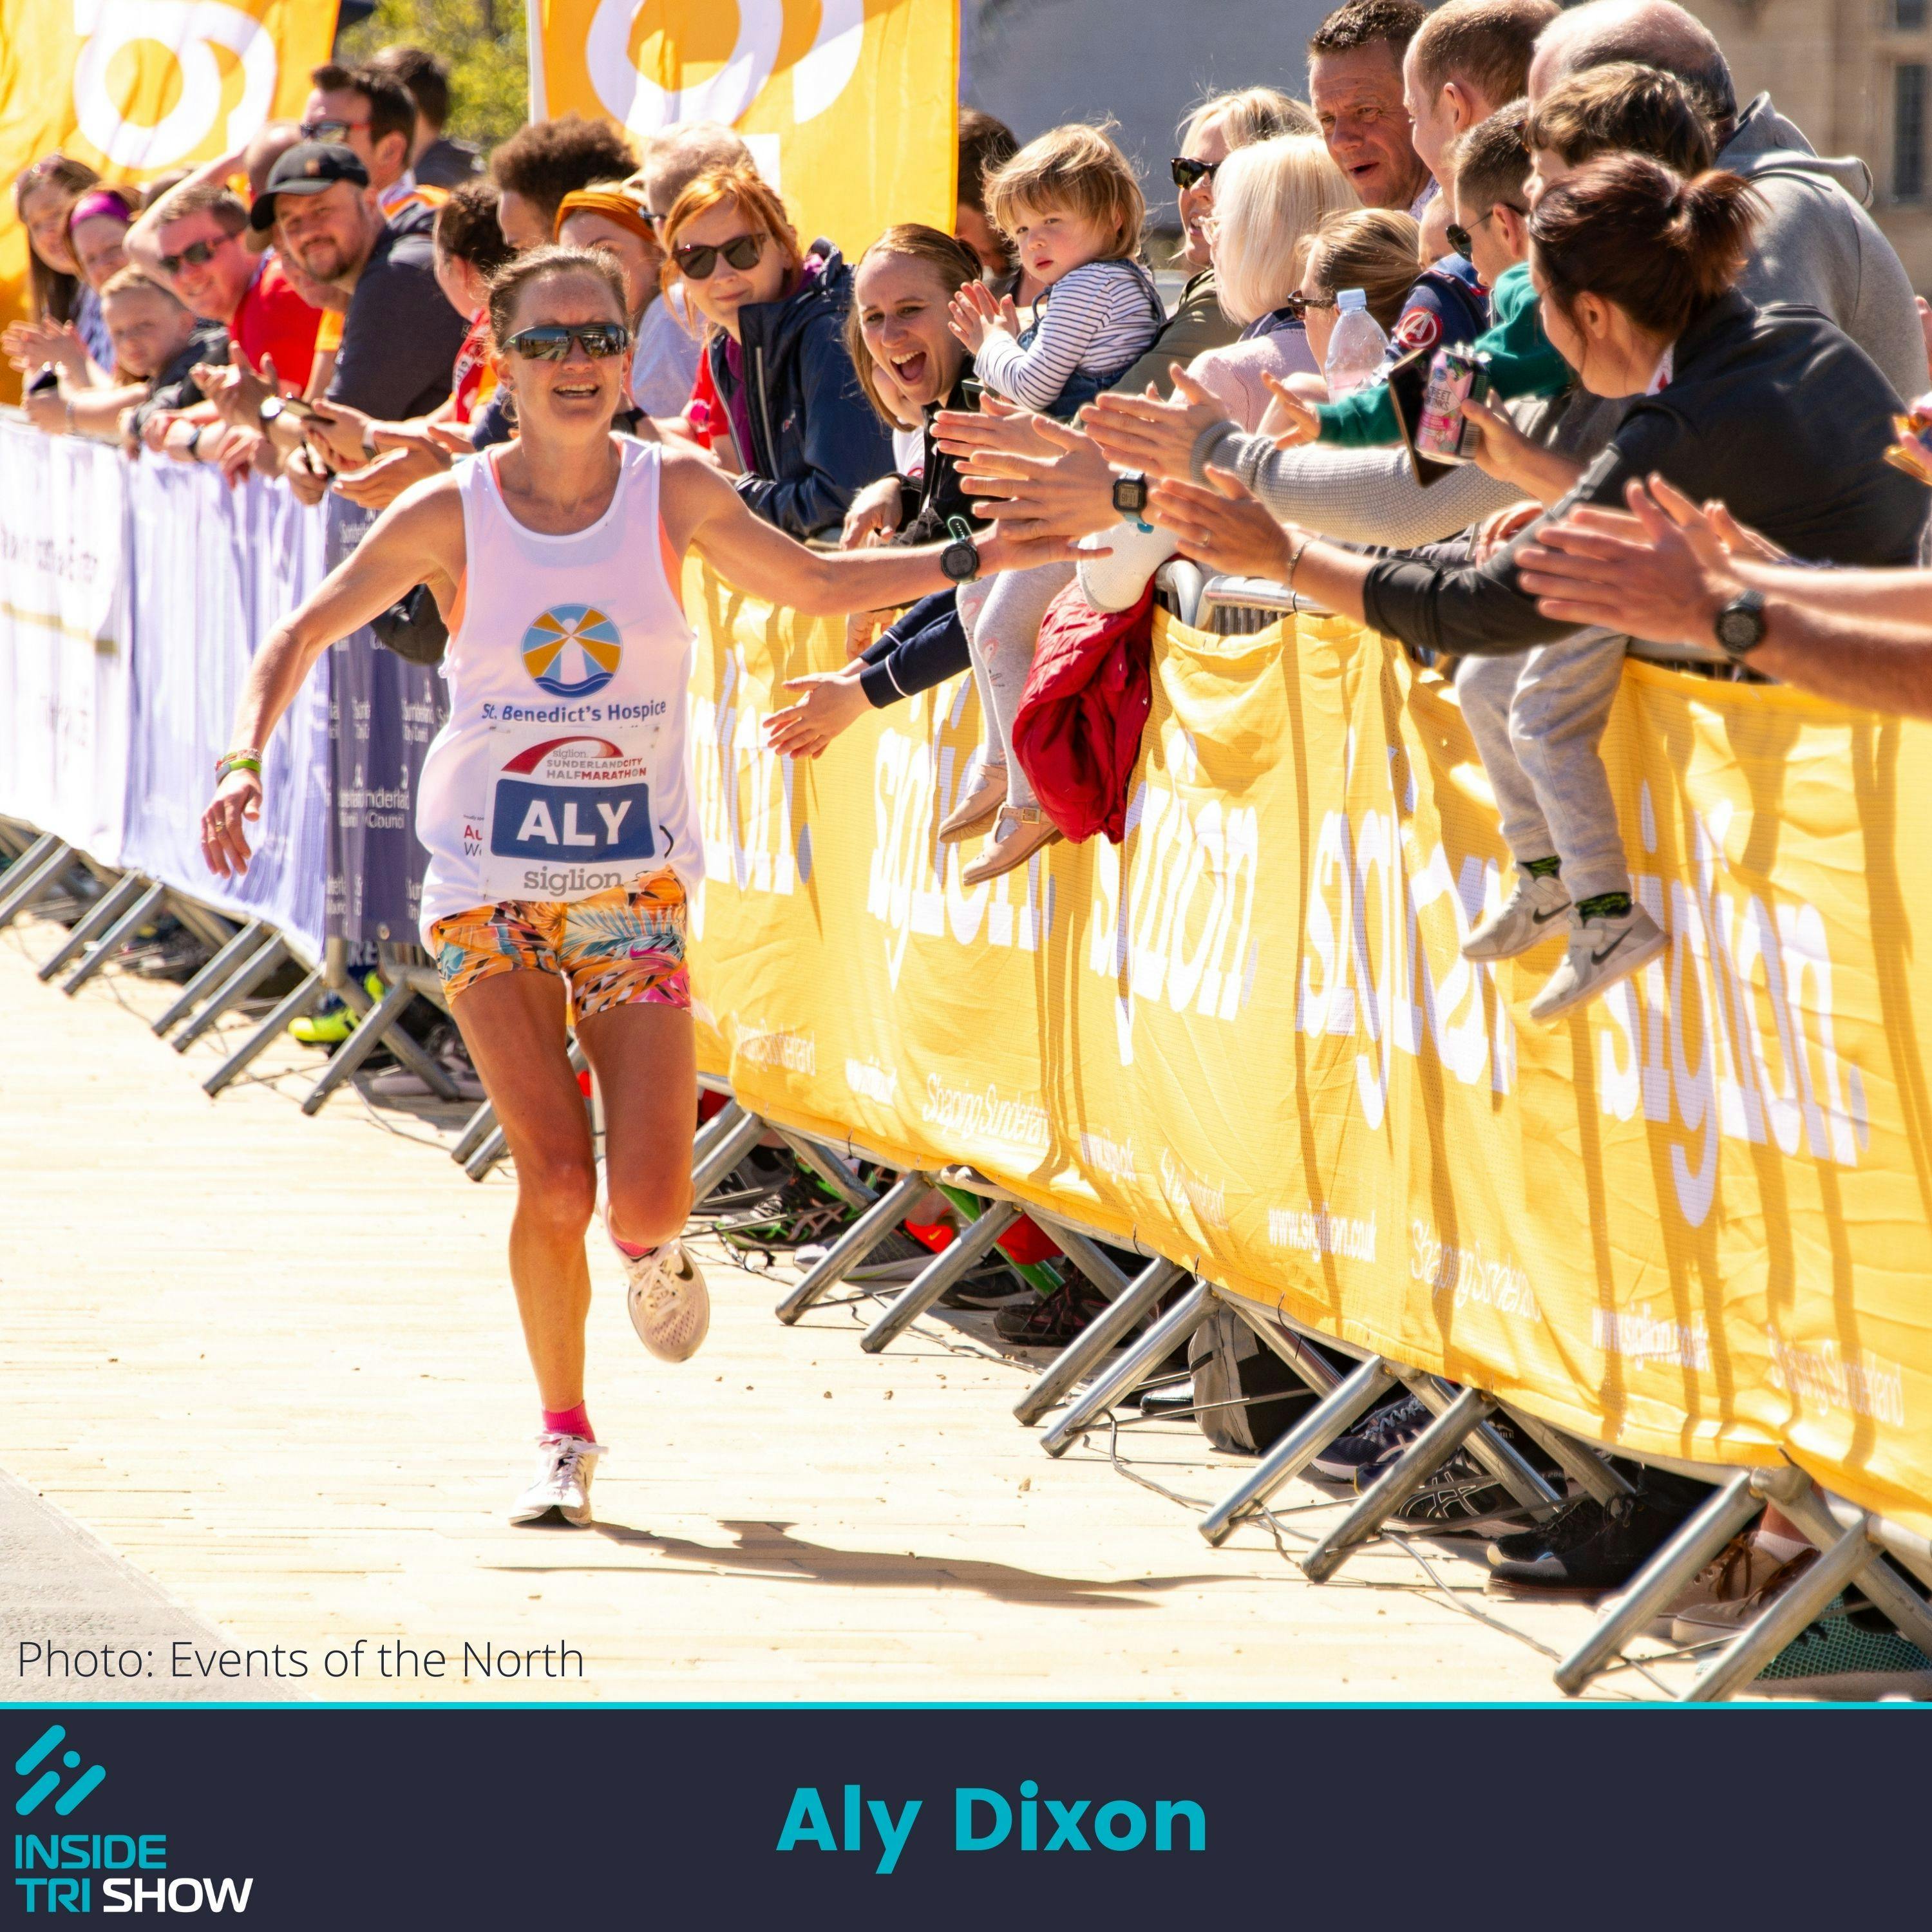 Aly Dixon - Olympic marathon and age group triathlete